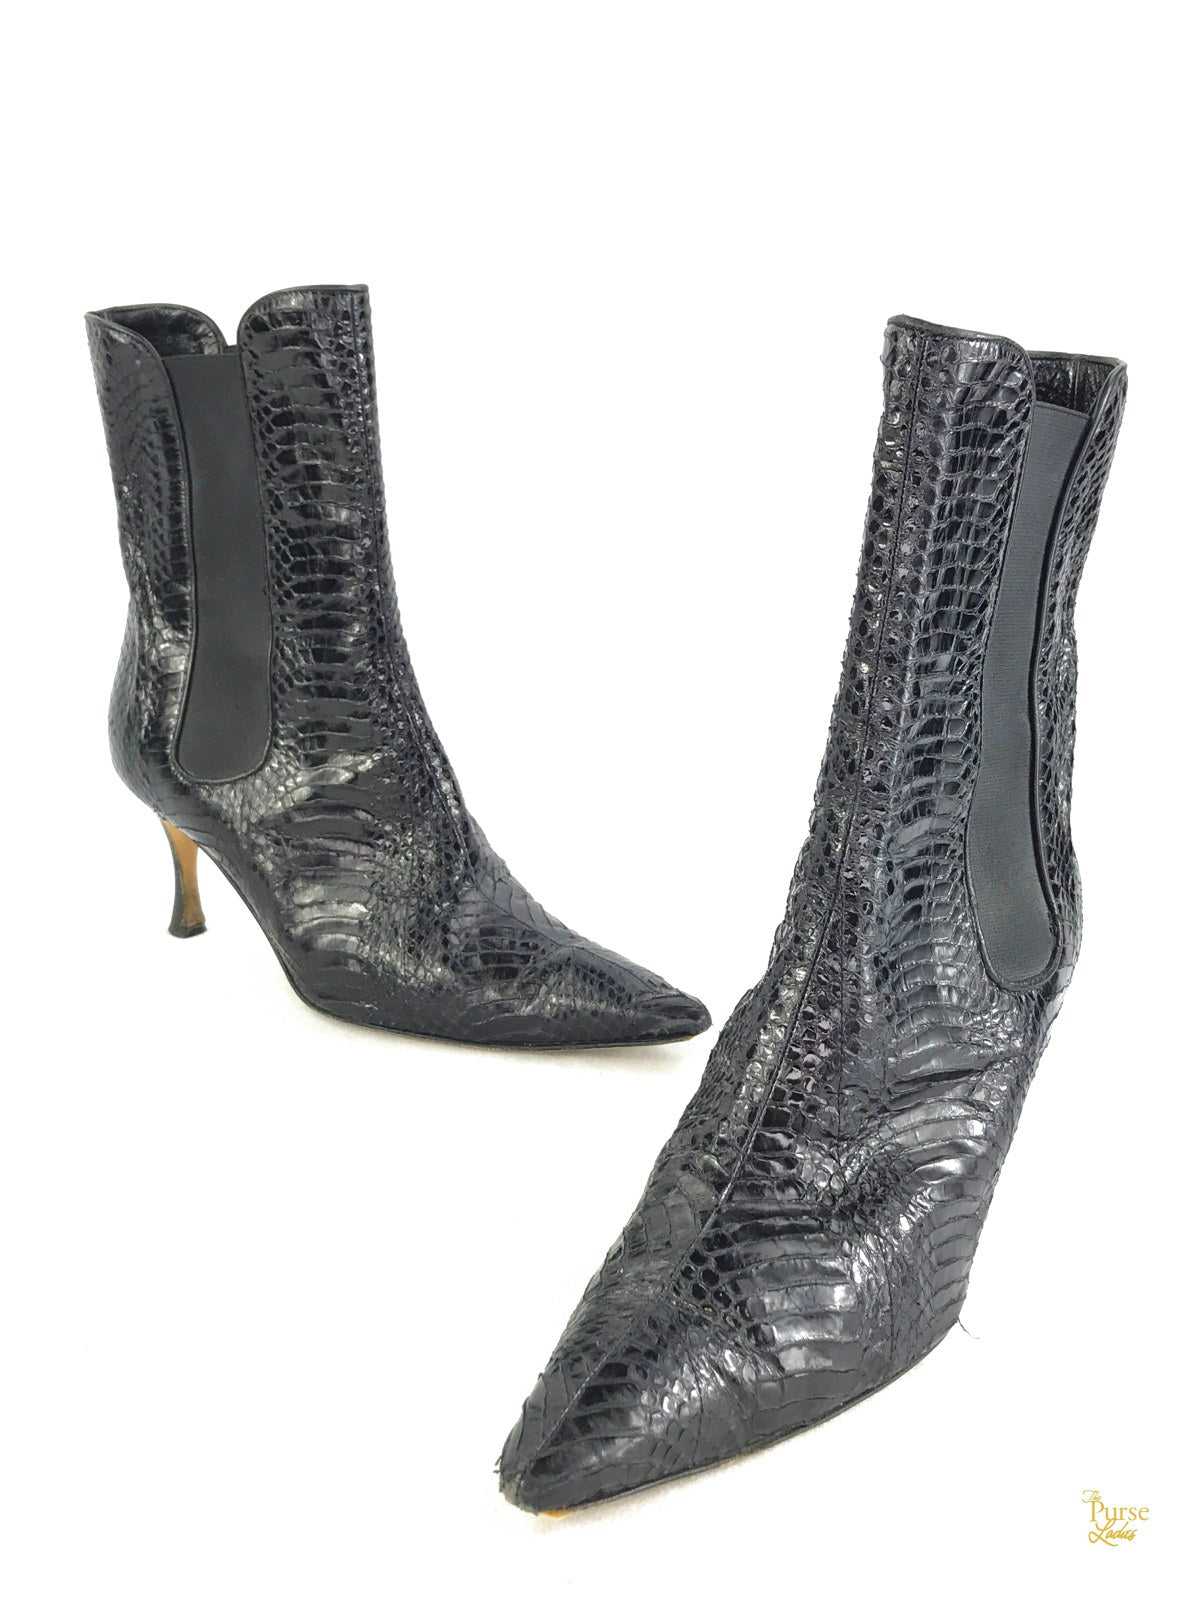 MANOLO BLAHNIK Black Snakeskin Ankle Boots